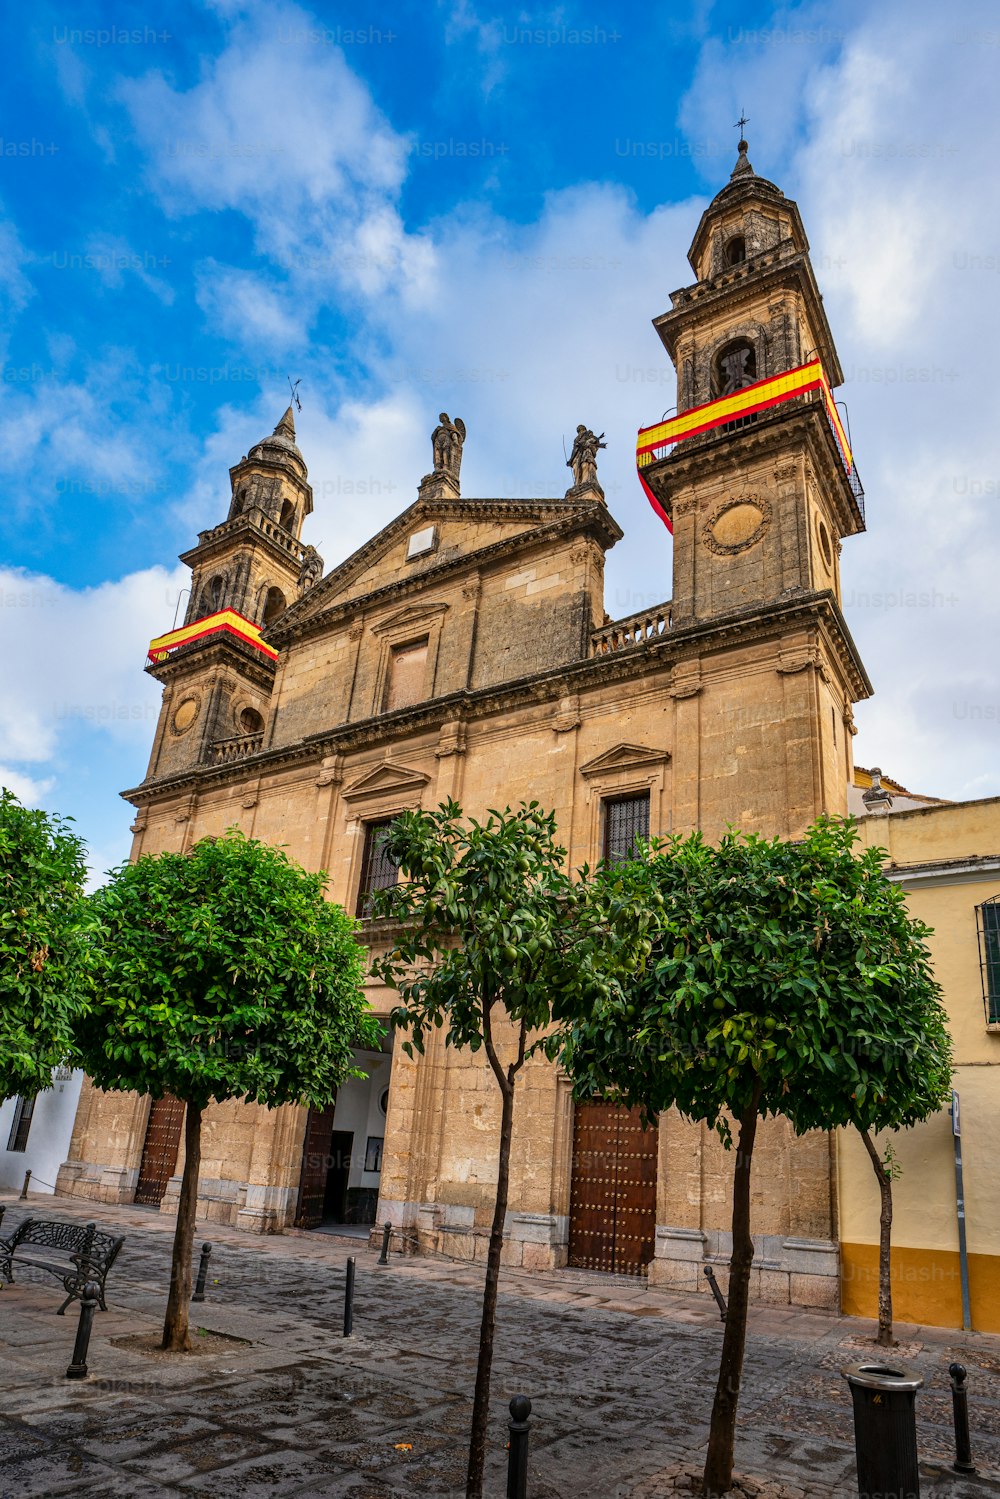 The church Juramento de San Rafael in Cordoba, Andalusia, Spain.